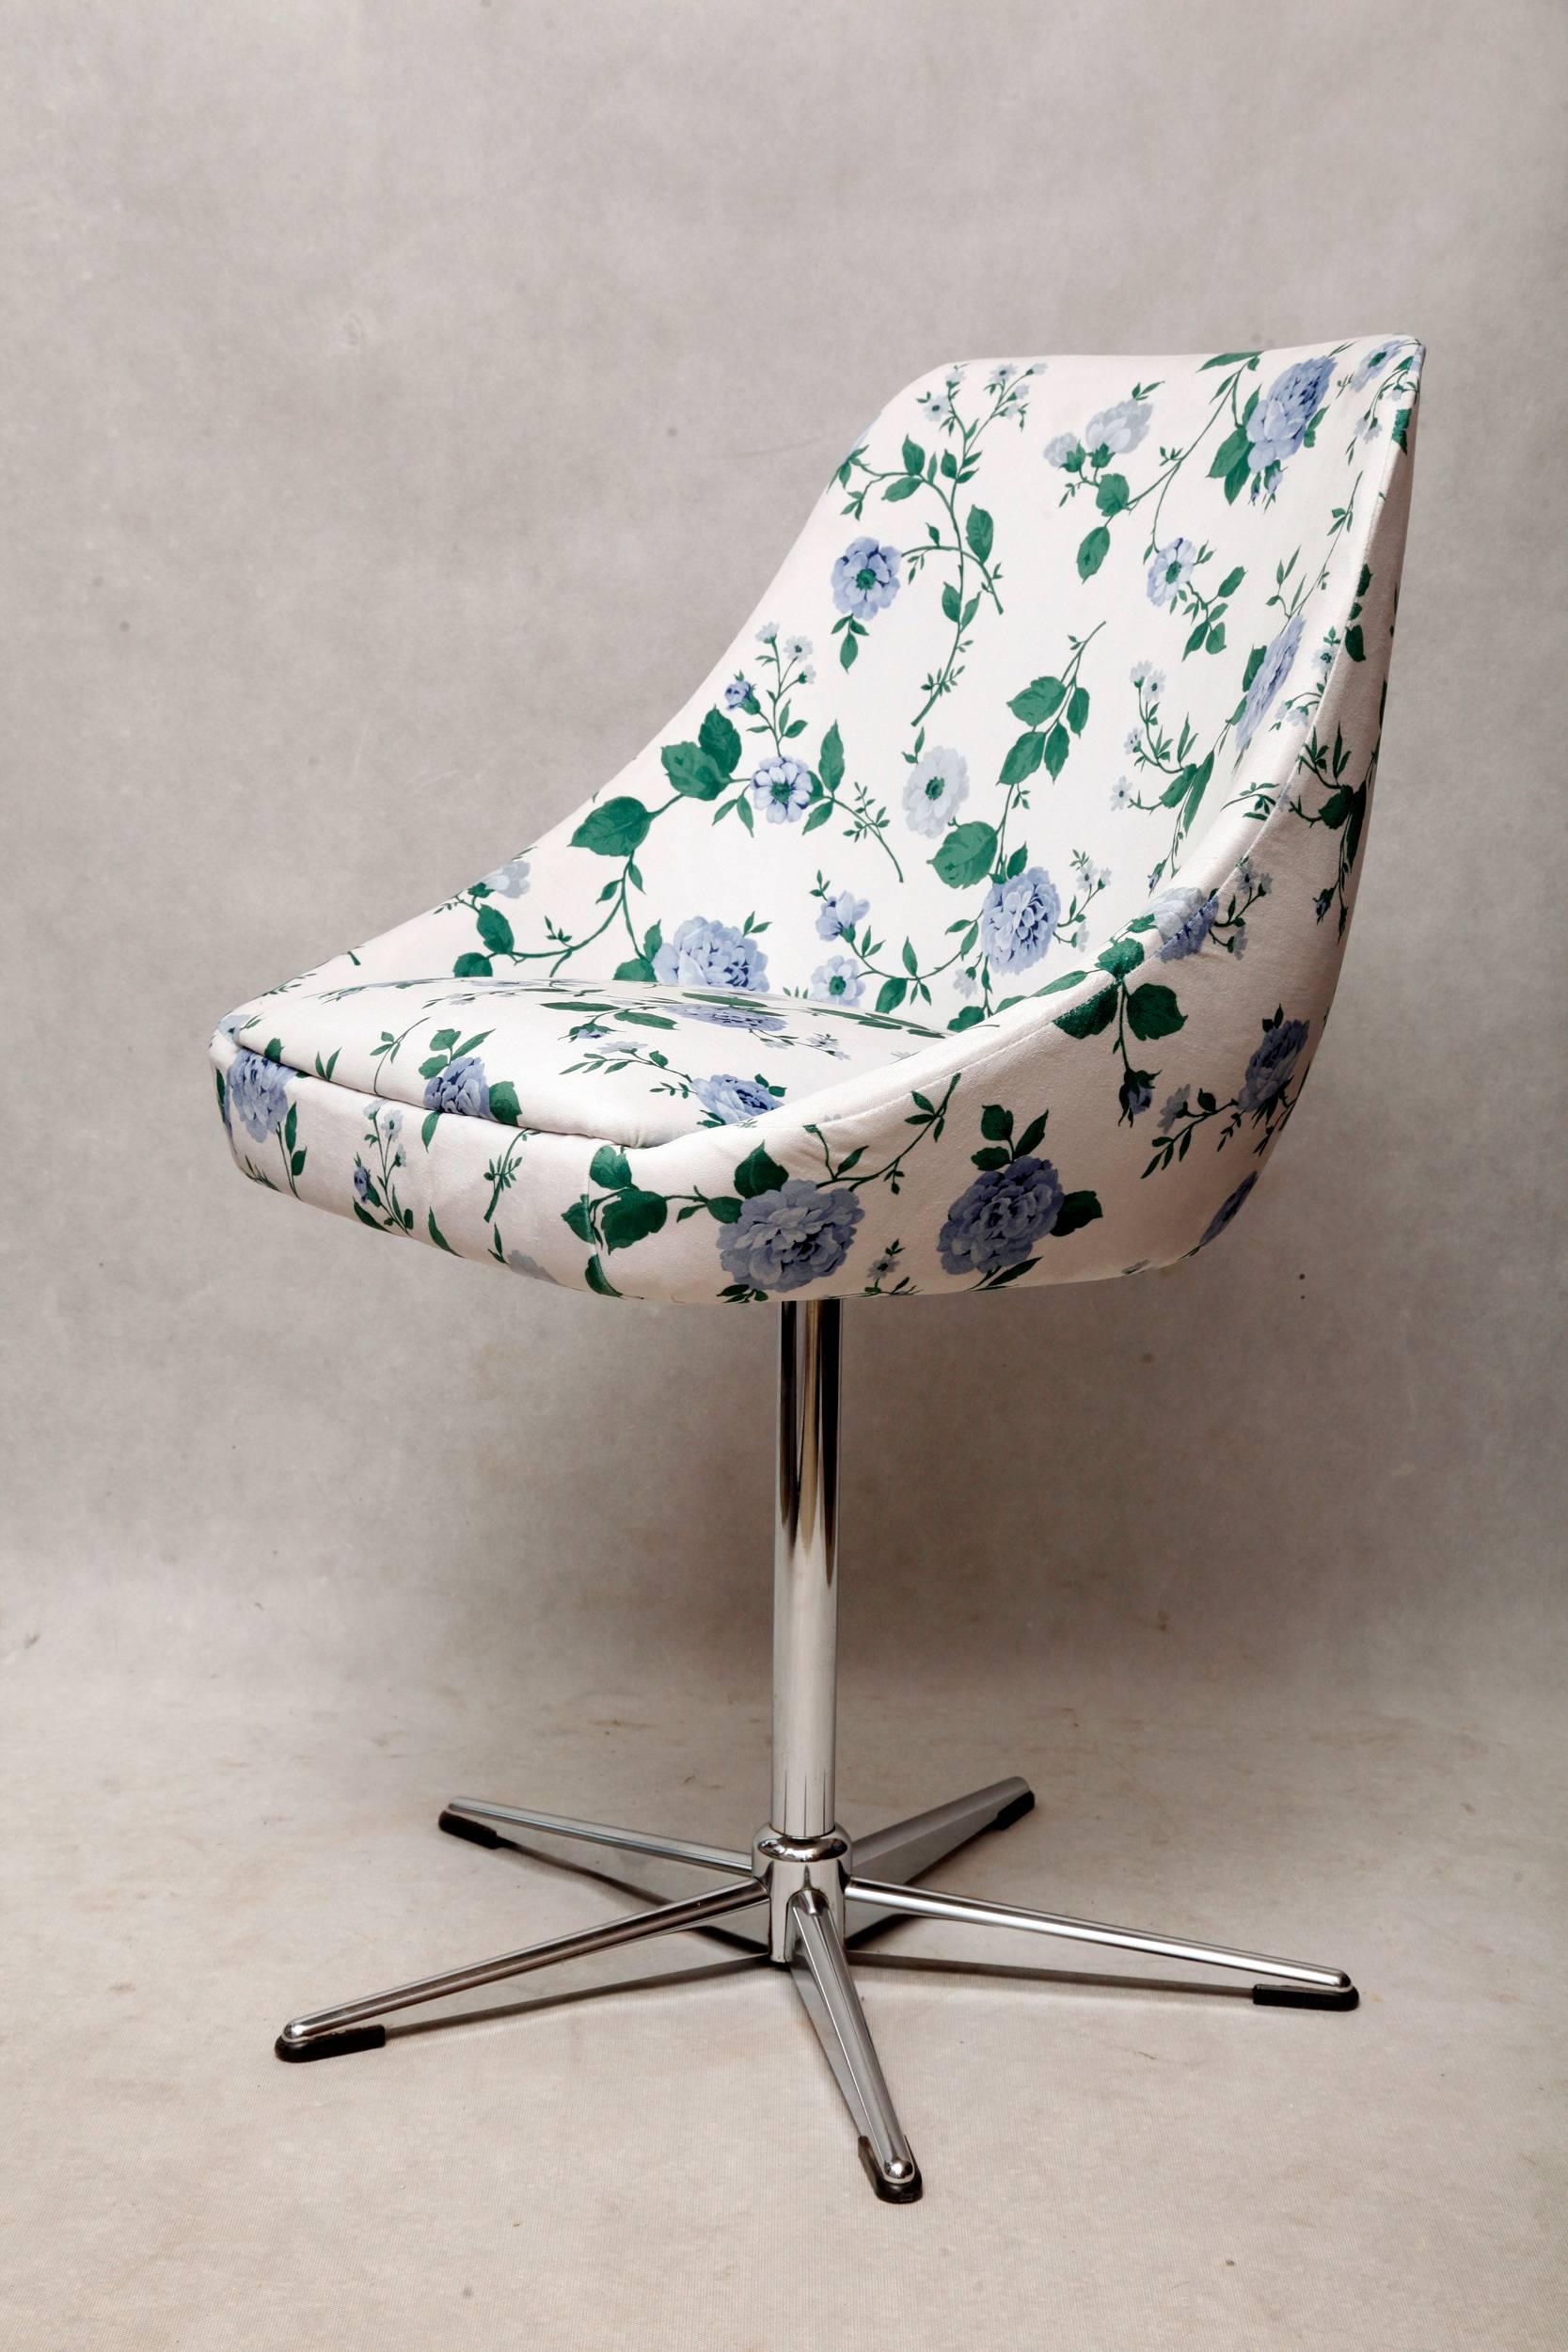 Polish Plush Swivel Chair, Chrome, White and Floar, Poland, 1970s For Sale